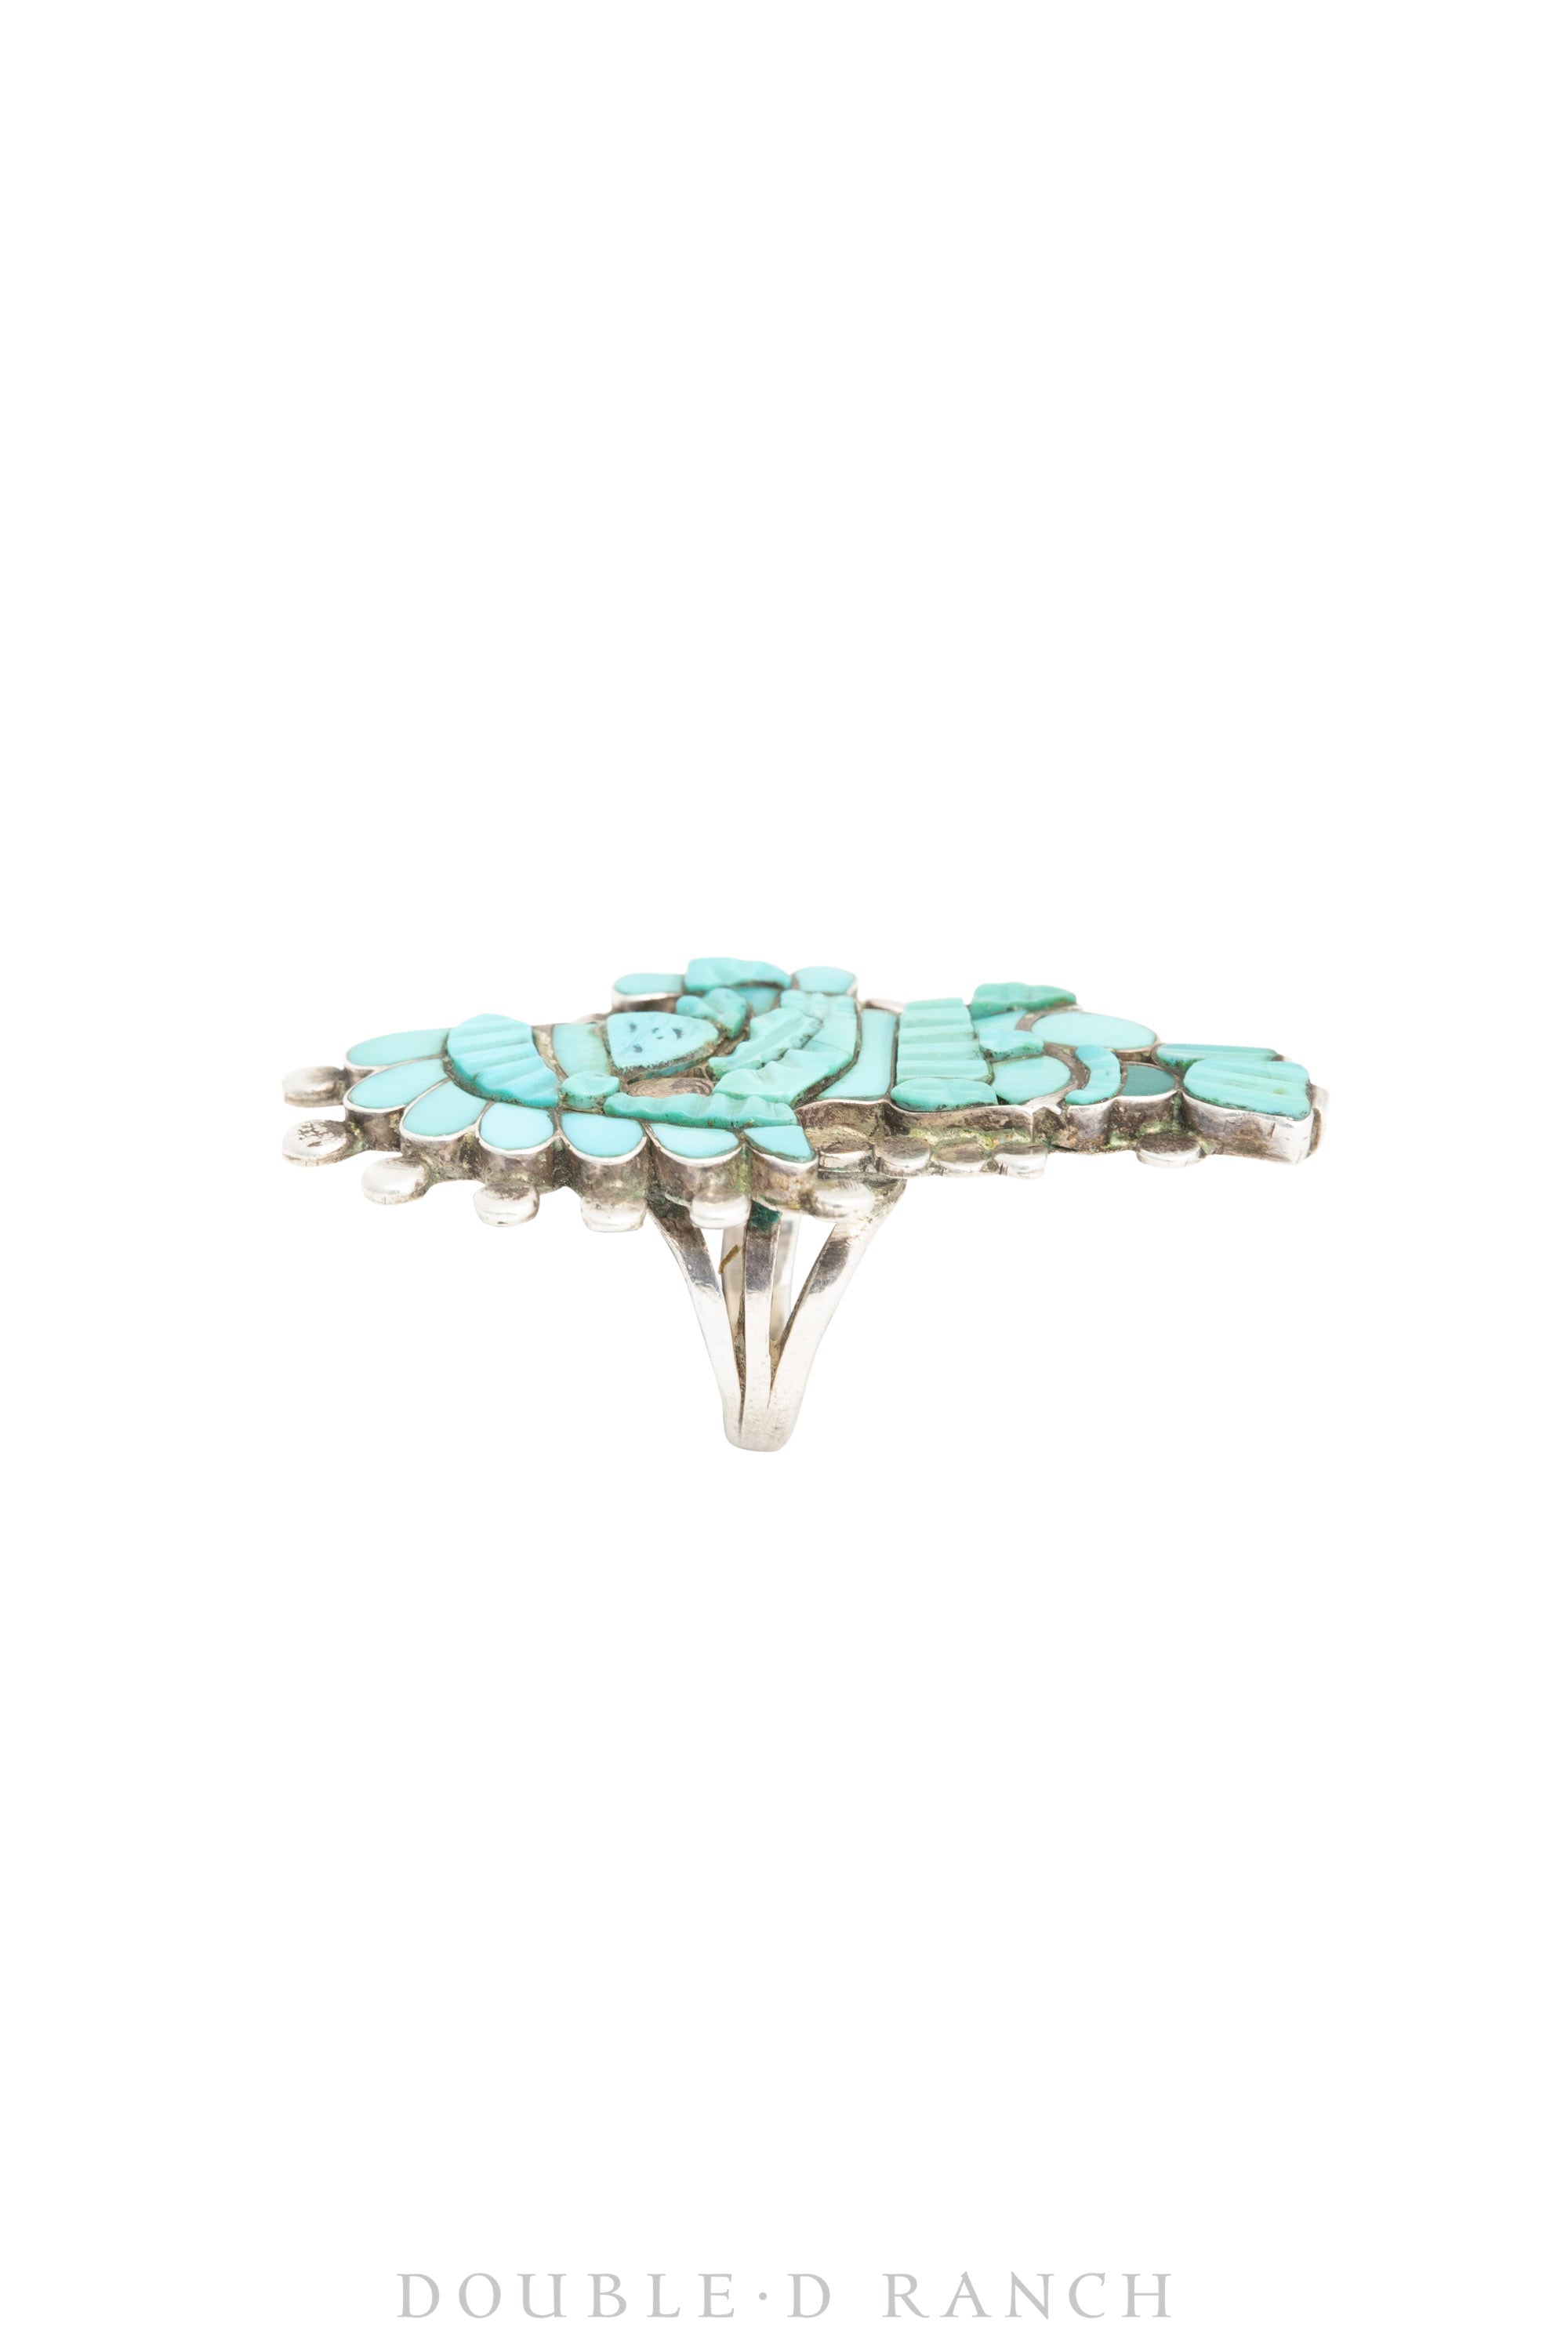 Ring, Conversational, Turquoise, Hoop Dancer, Hallmark, Vintage ‘70s, 1270